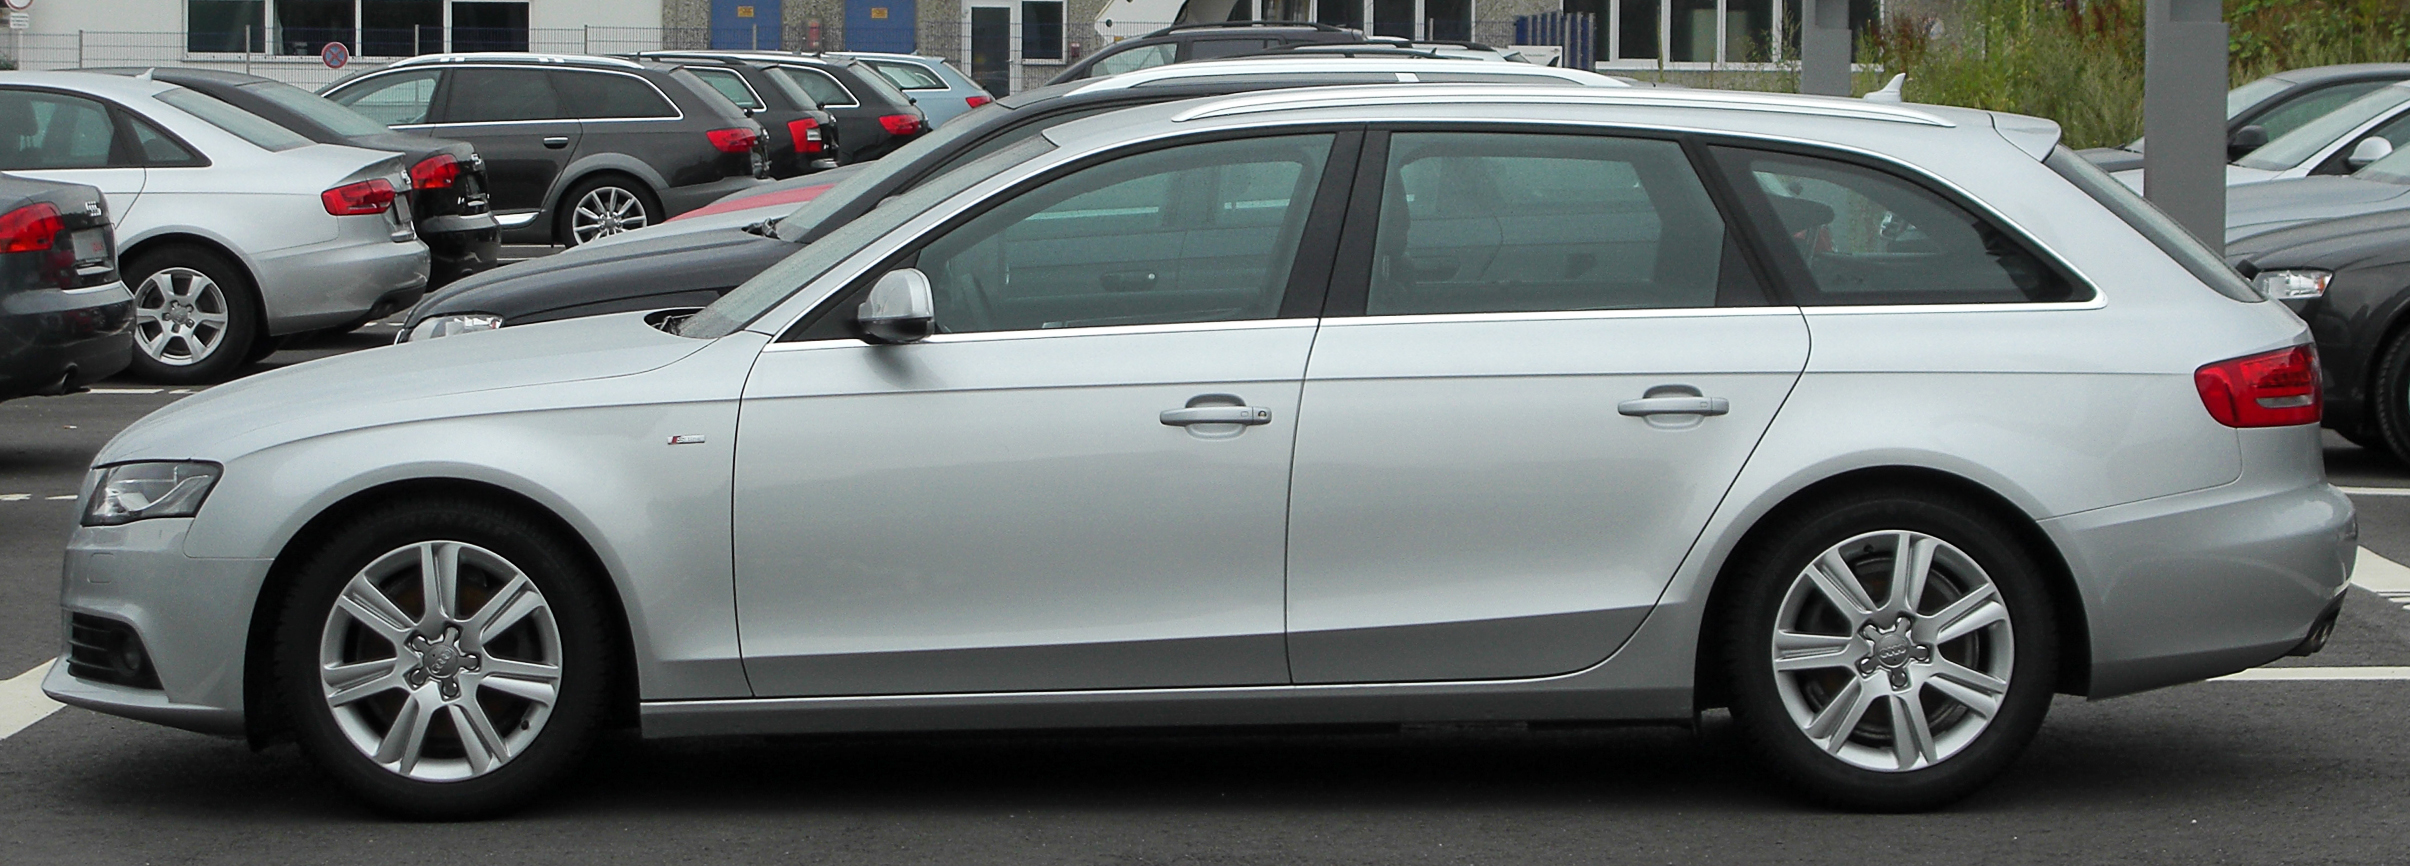 File:Audi A4 B8 Avant 2.0 TDI side 20100725.jpg - Wikimedia Commons